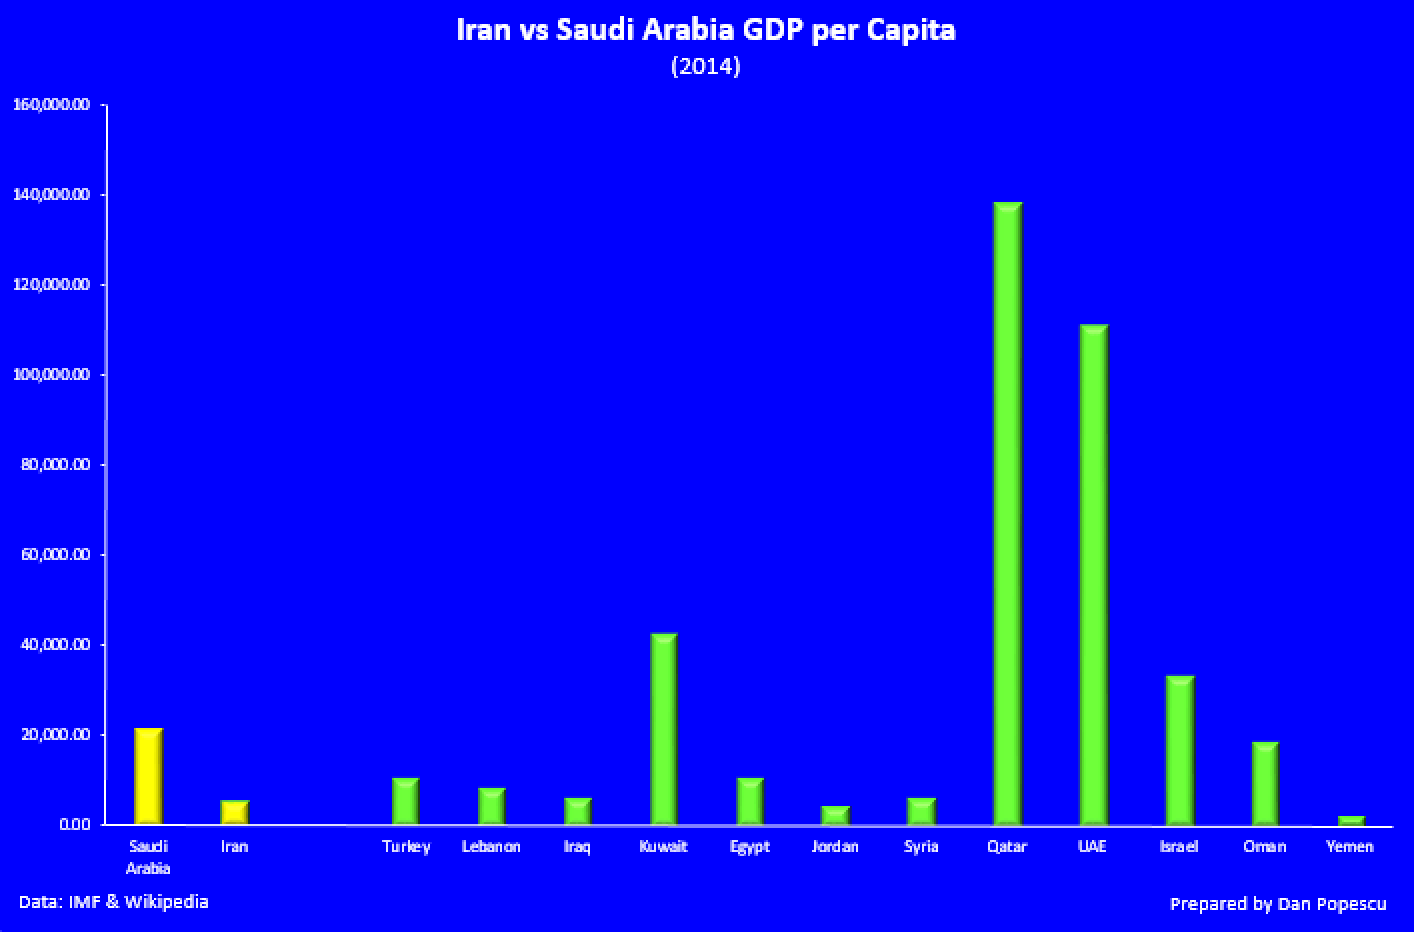 Iran and Saudi Arabia GDP per capita